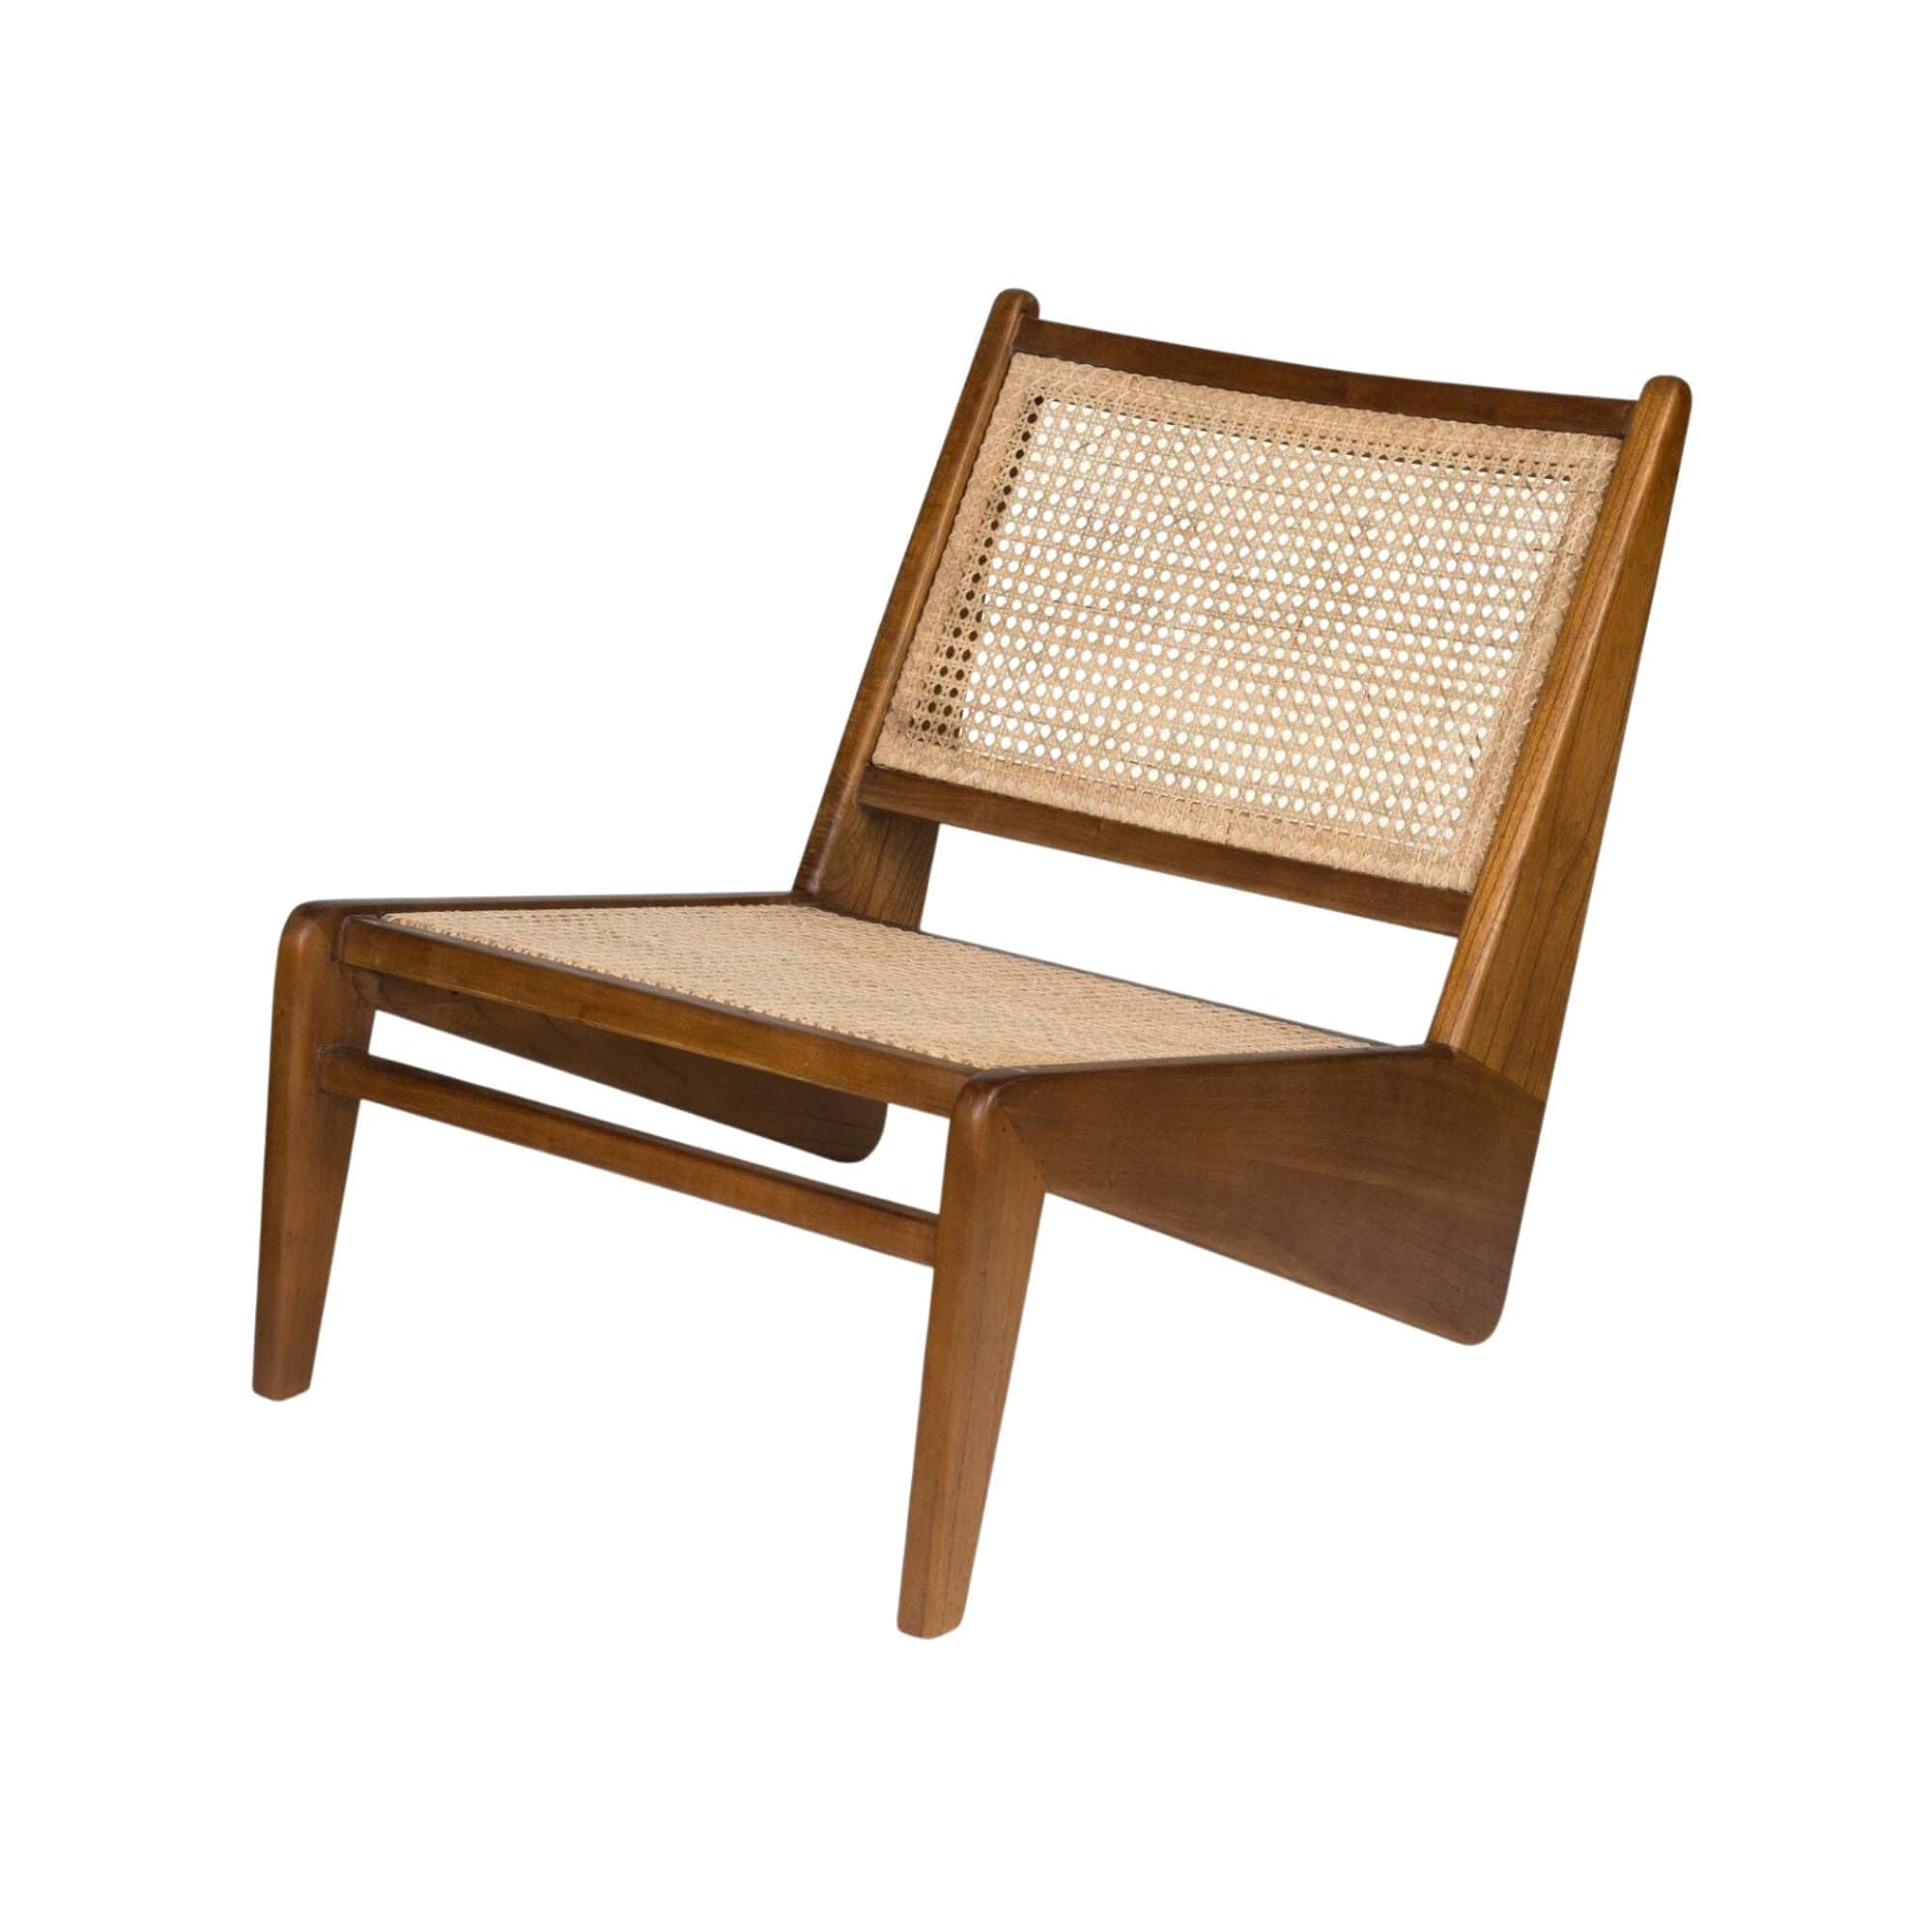 Chandigarh Kangaroo Chair - THAT COOL LIVING